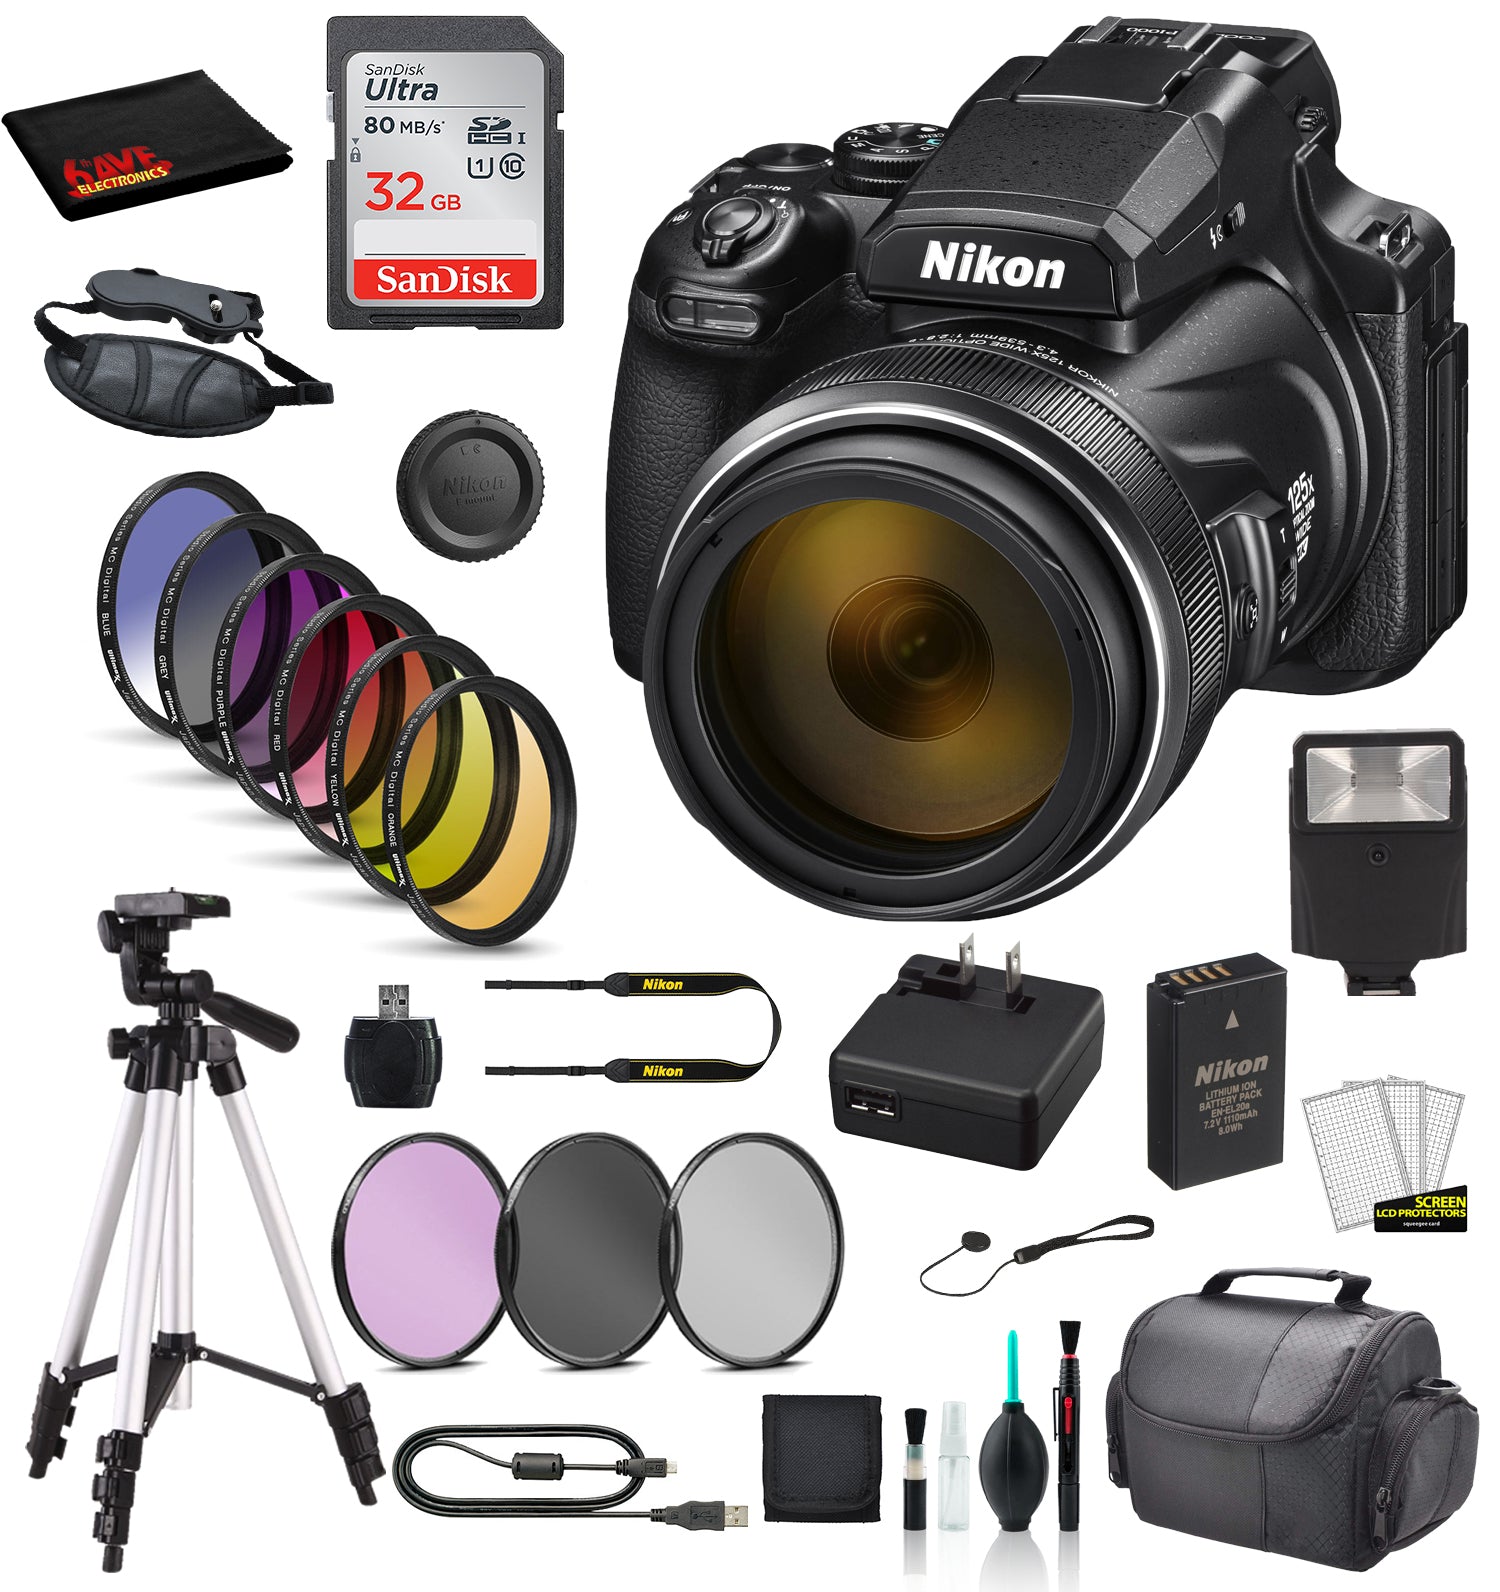 Nikon COOLPIX P1000 Digital Camera Bundle Includes SanDisk 32GB SD Card + 9PC Filter Kit + MORE  - International Model